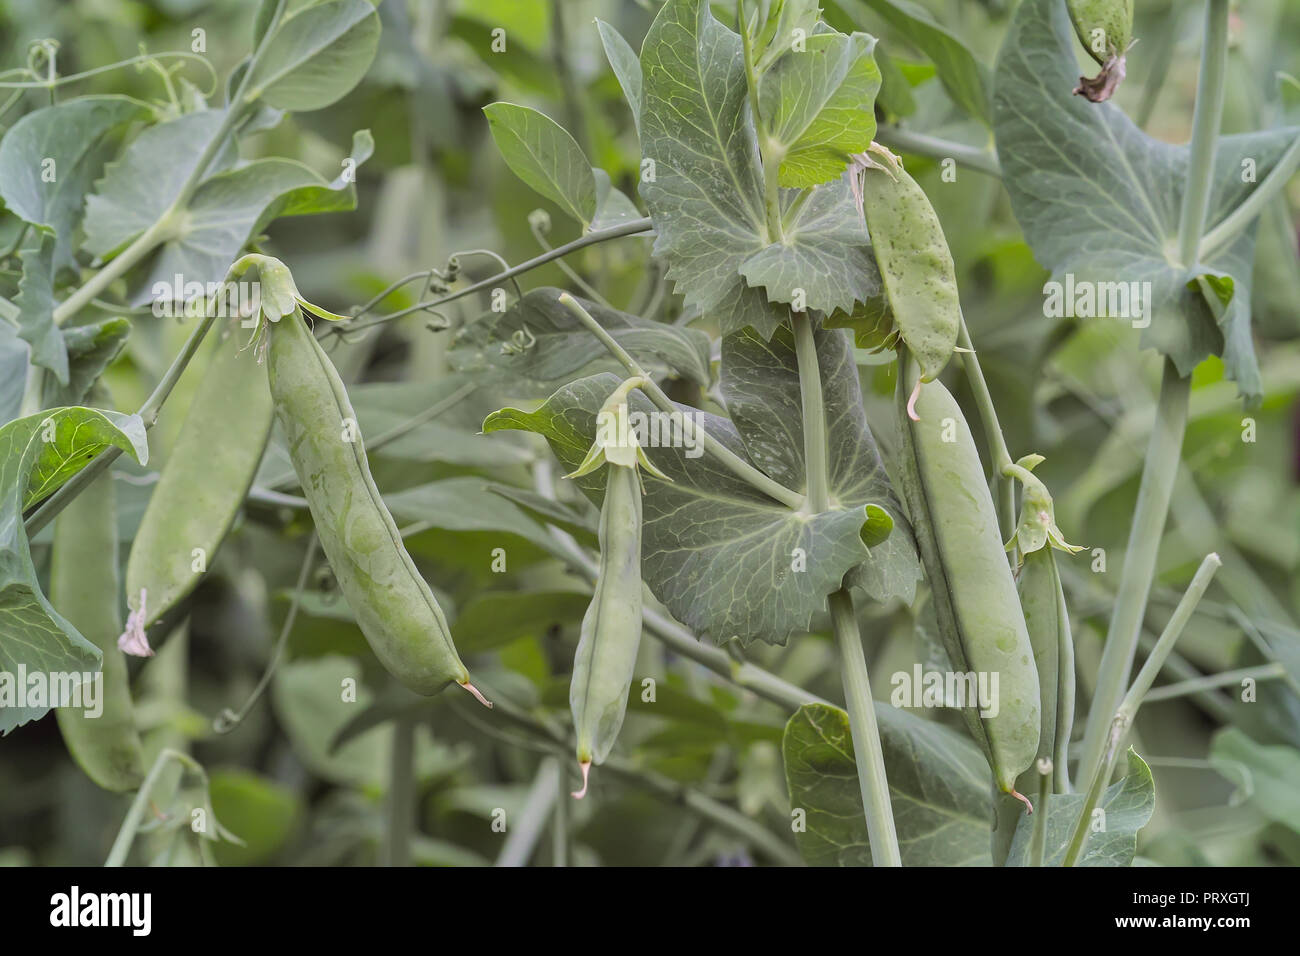 Peas in pods, vegetable patch, Pisum sativum L. convar, Bavaria, Germany, Europe Stock Photo